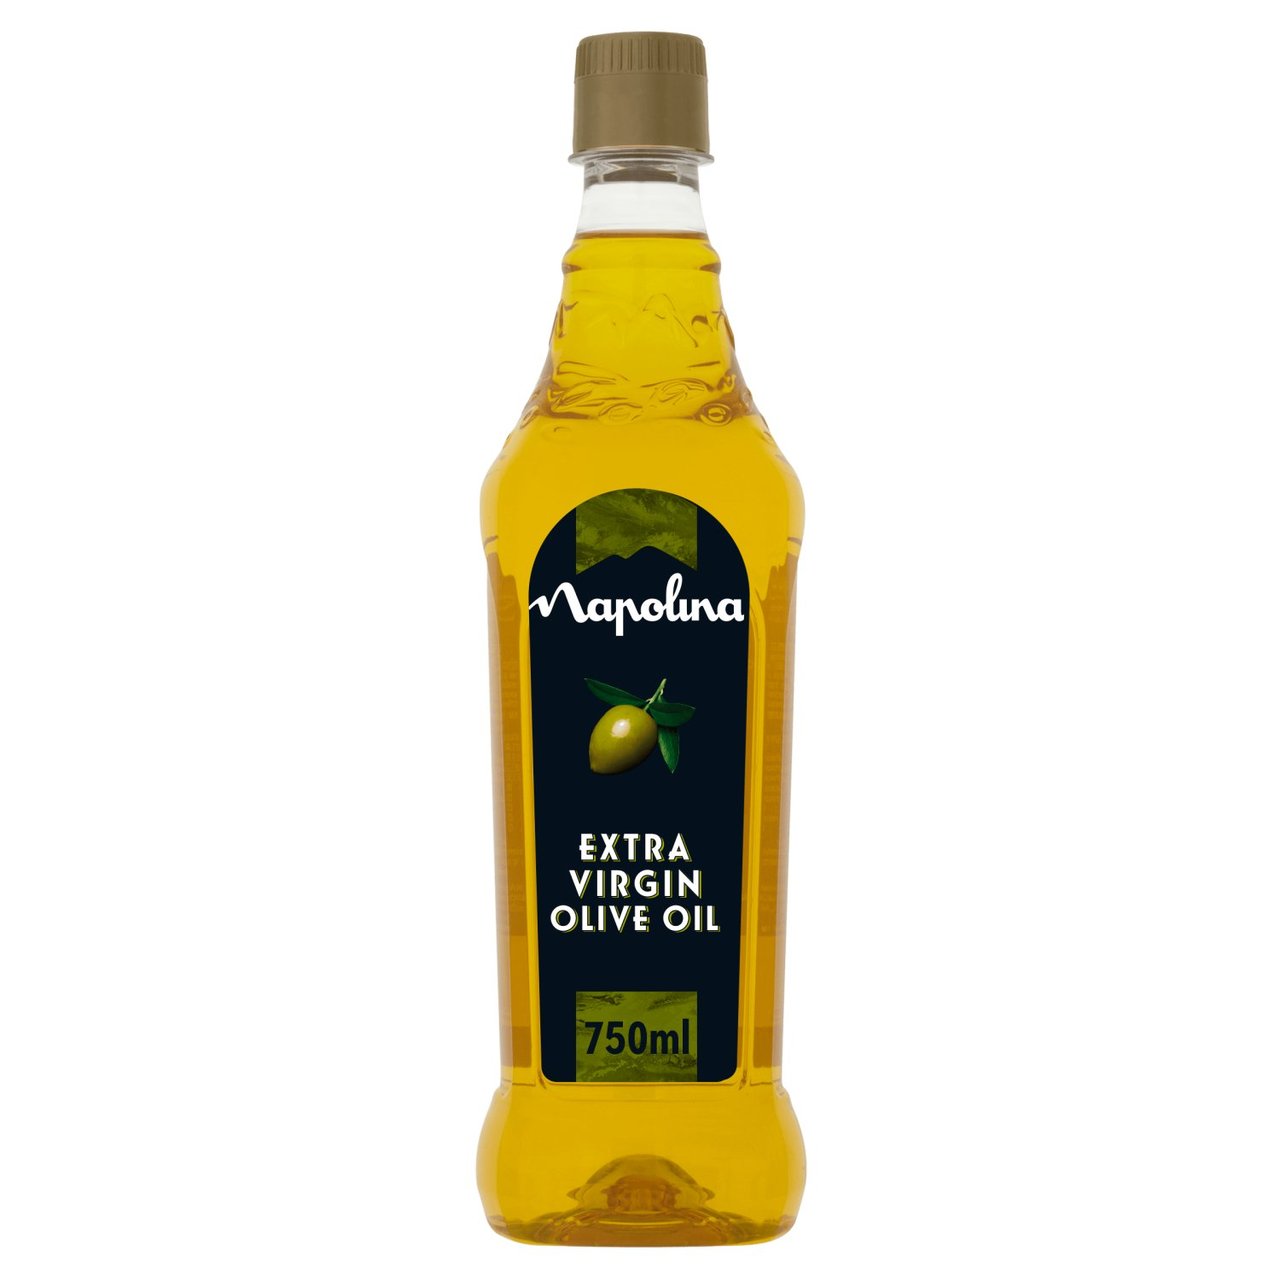 Napolina Extra Virgin Olive Oil